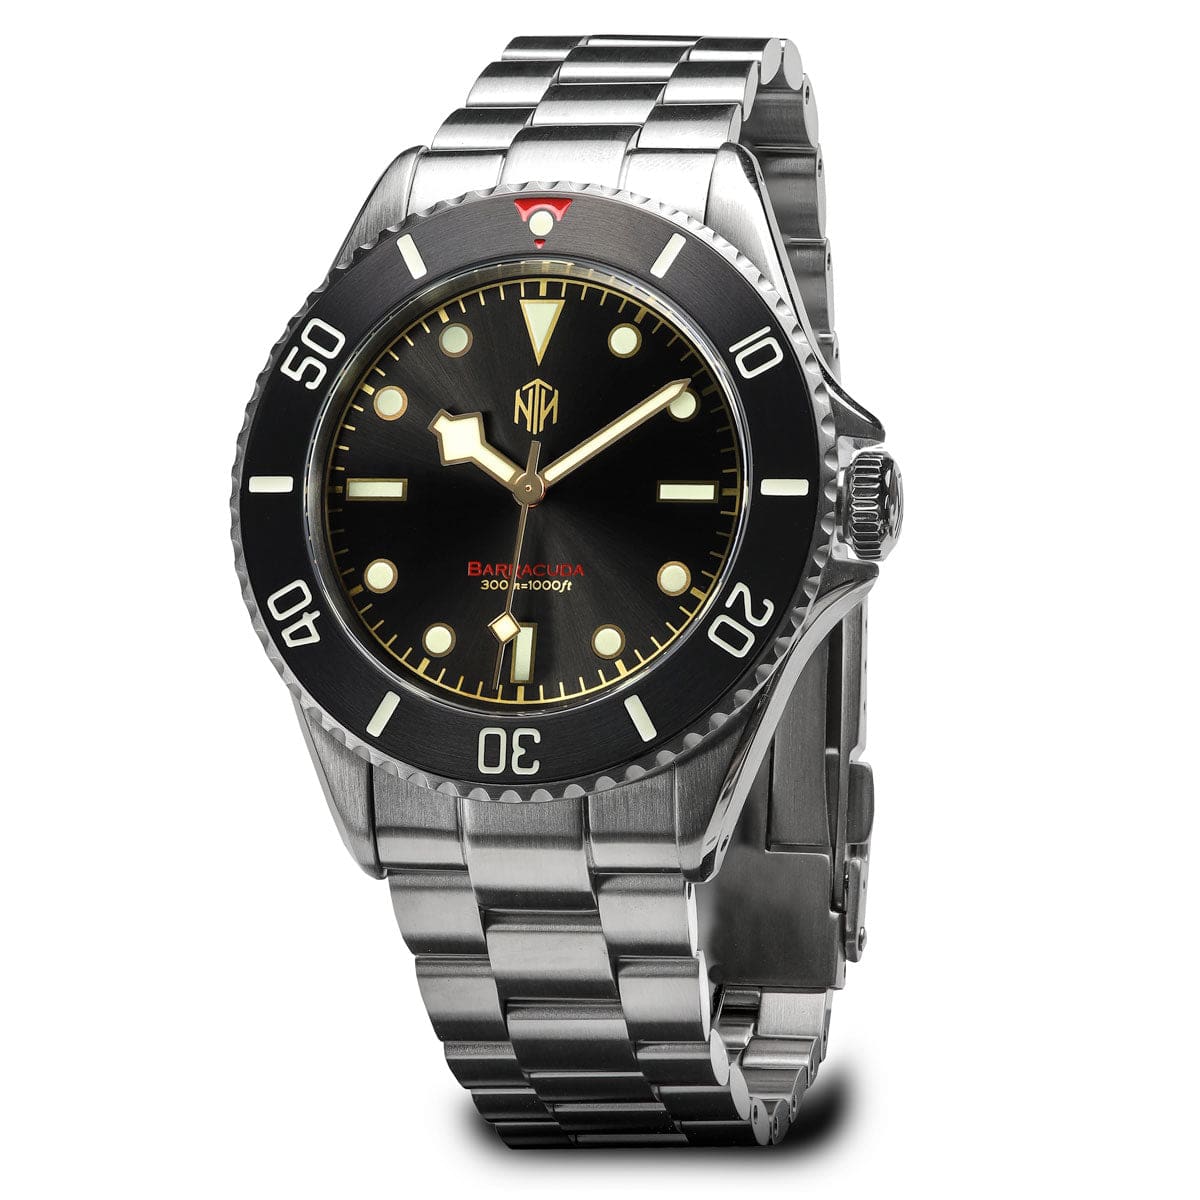 NTH V2 Barracuda Diver's Watch - Vintage Black 